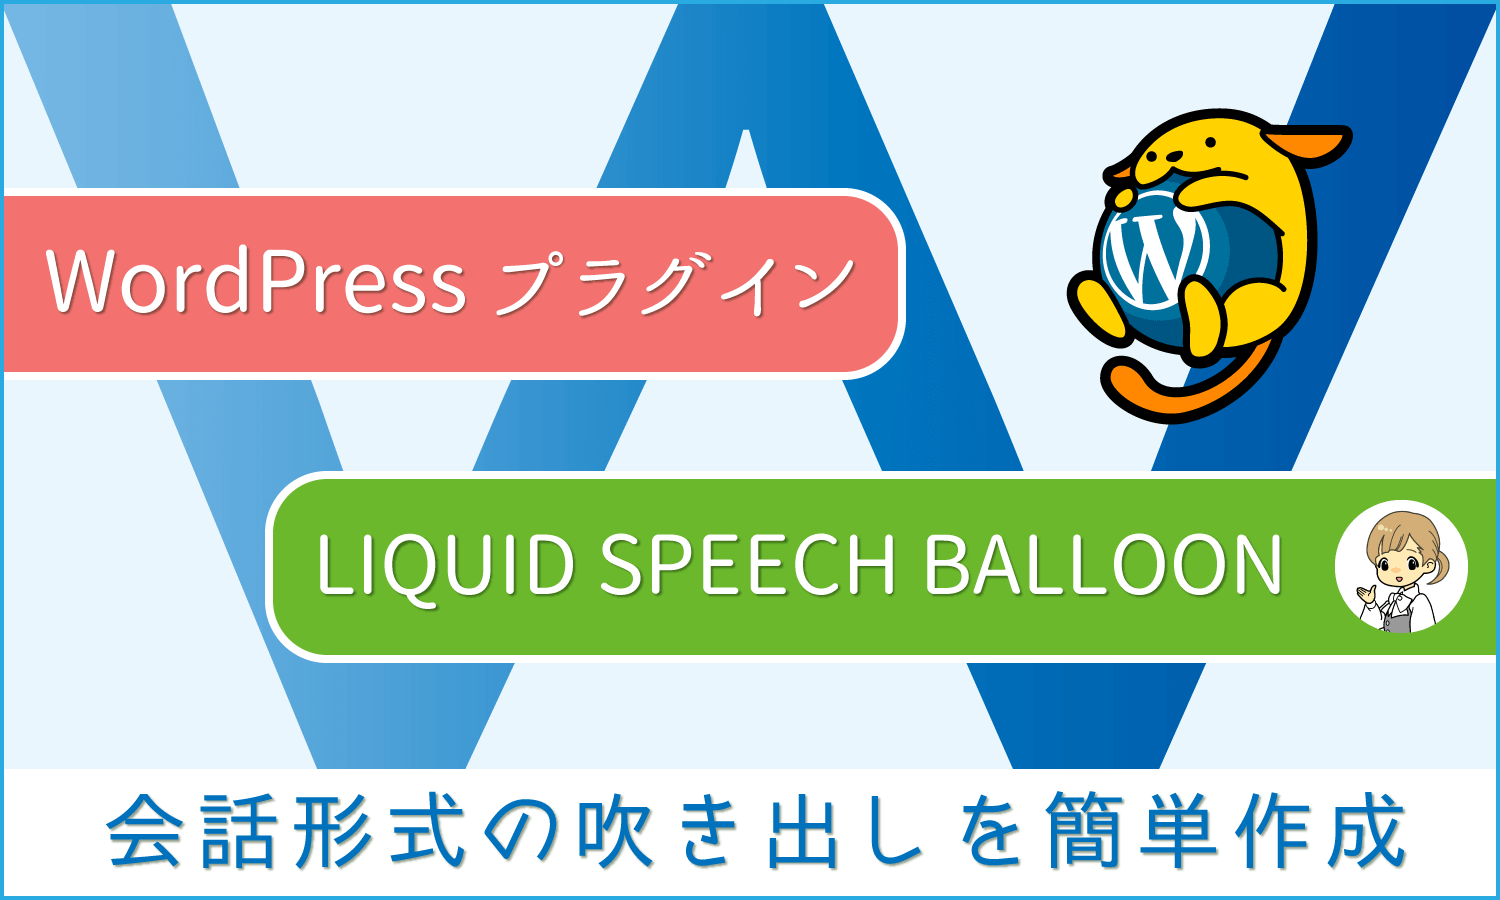 Wordpressプラグイン 会話形式の吹き出しを簡単作成 Liquid Speech Balloon 創kenブログ